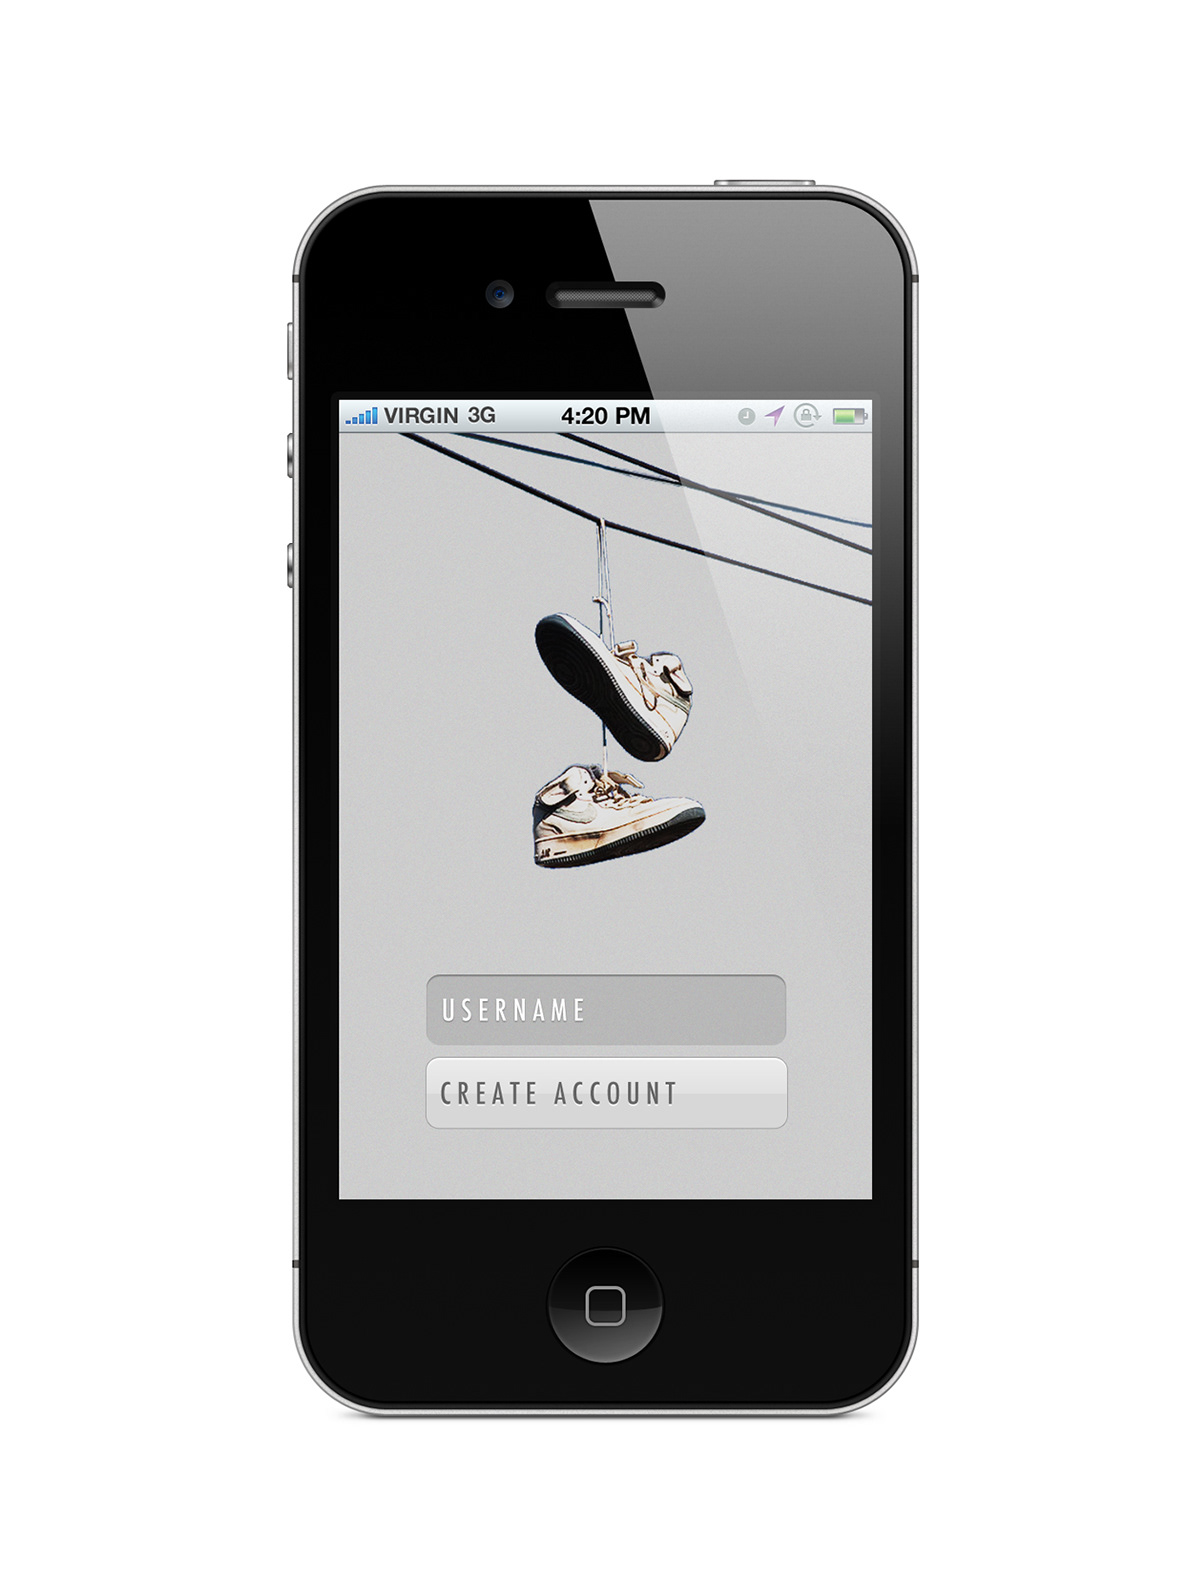 Drug Dealing app iphone design smartphone concept graphic application